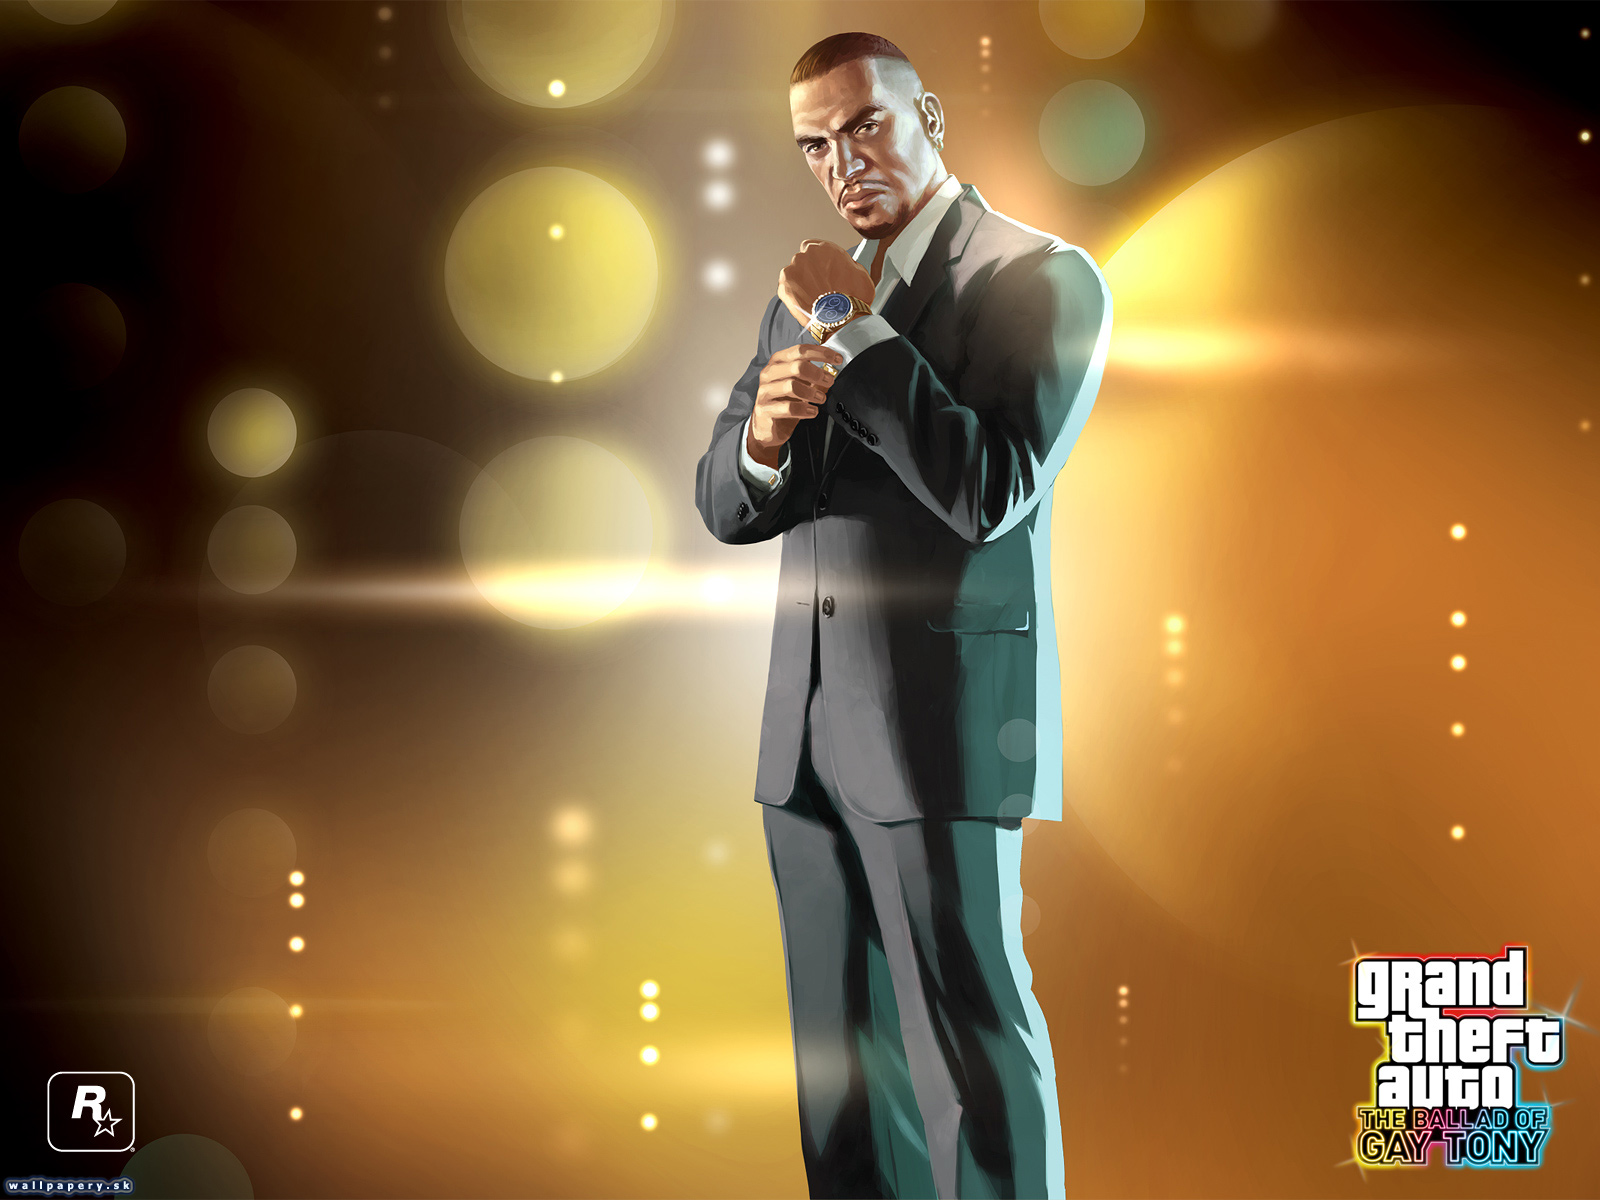 Grand Theft Auto IV: The Ballad of Gay Tony - wallpaper 5